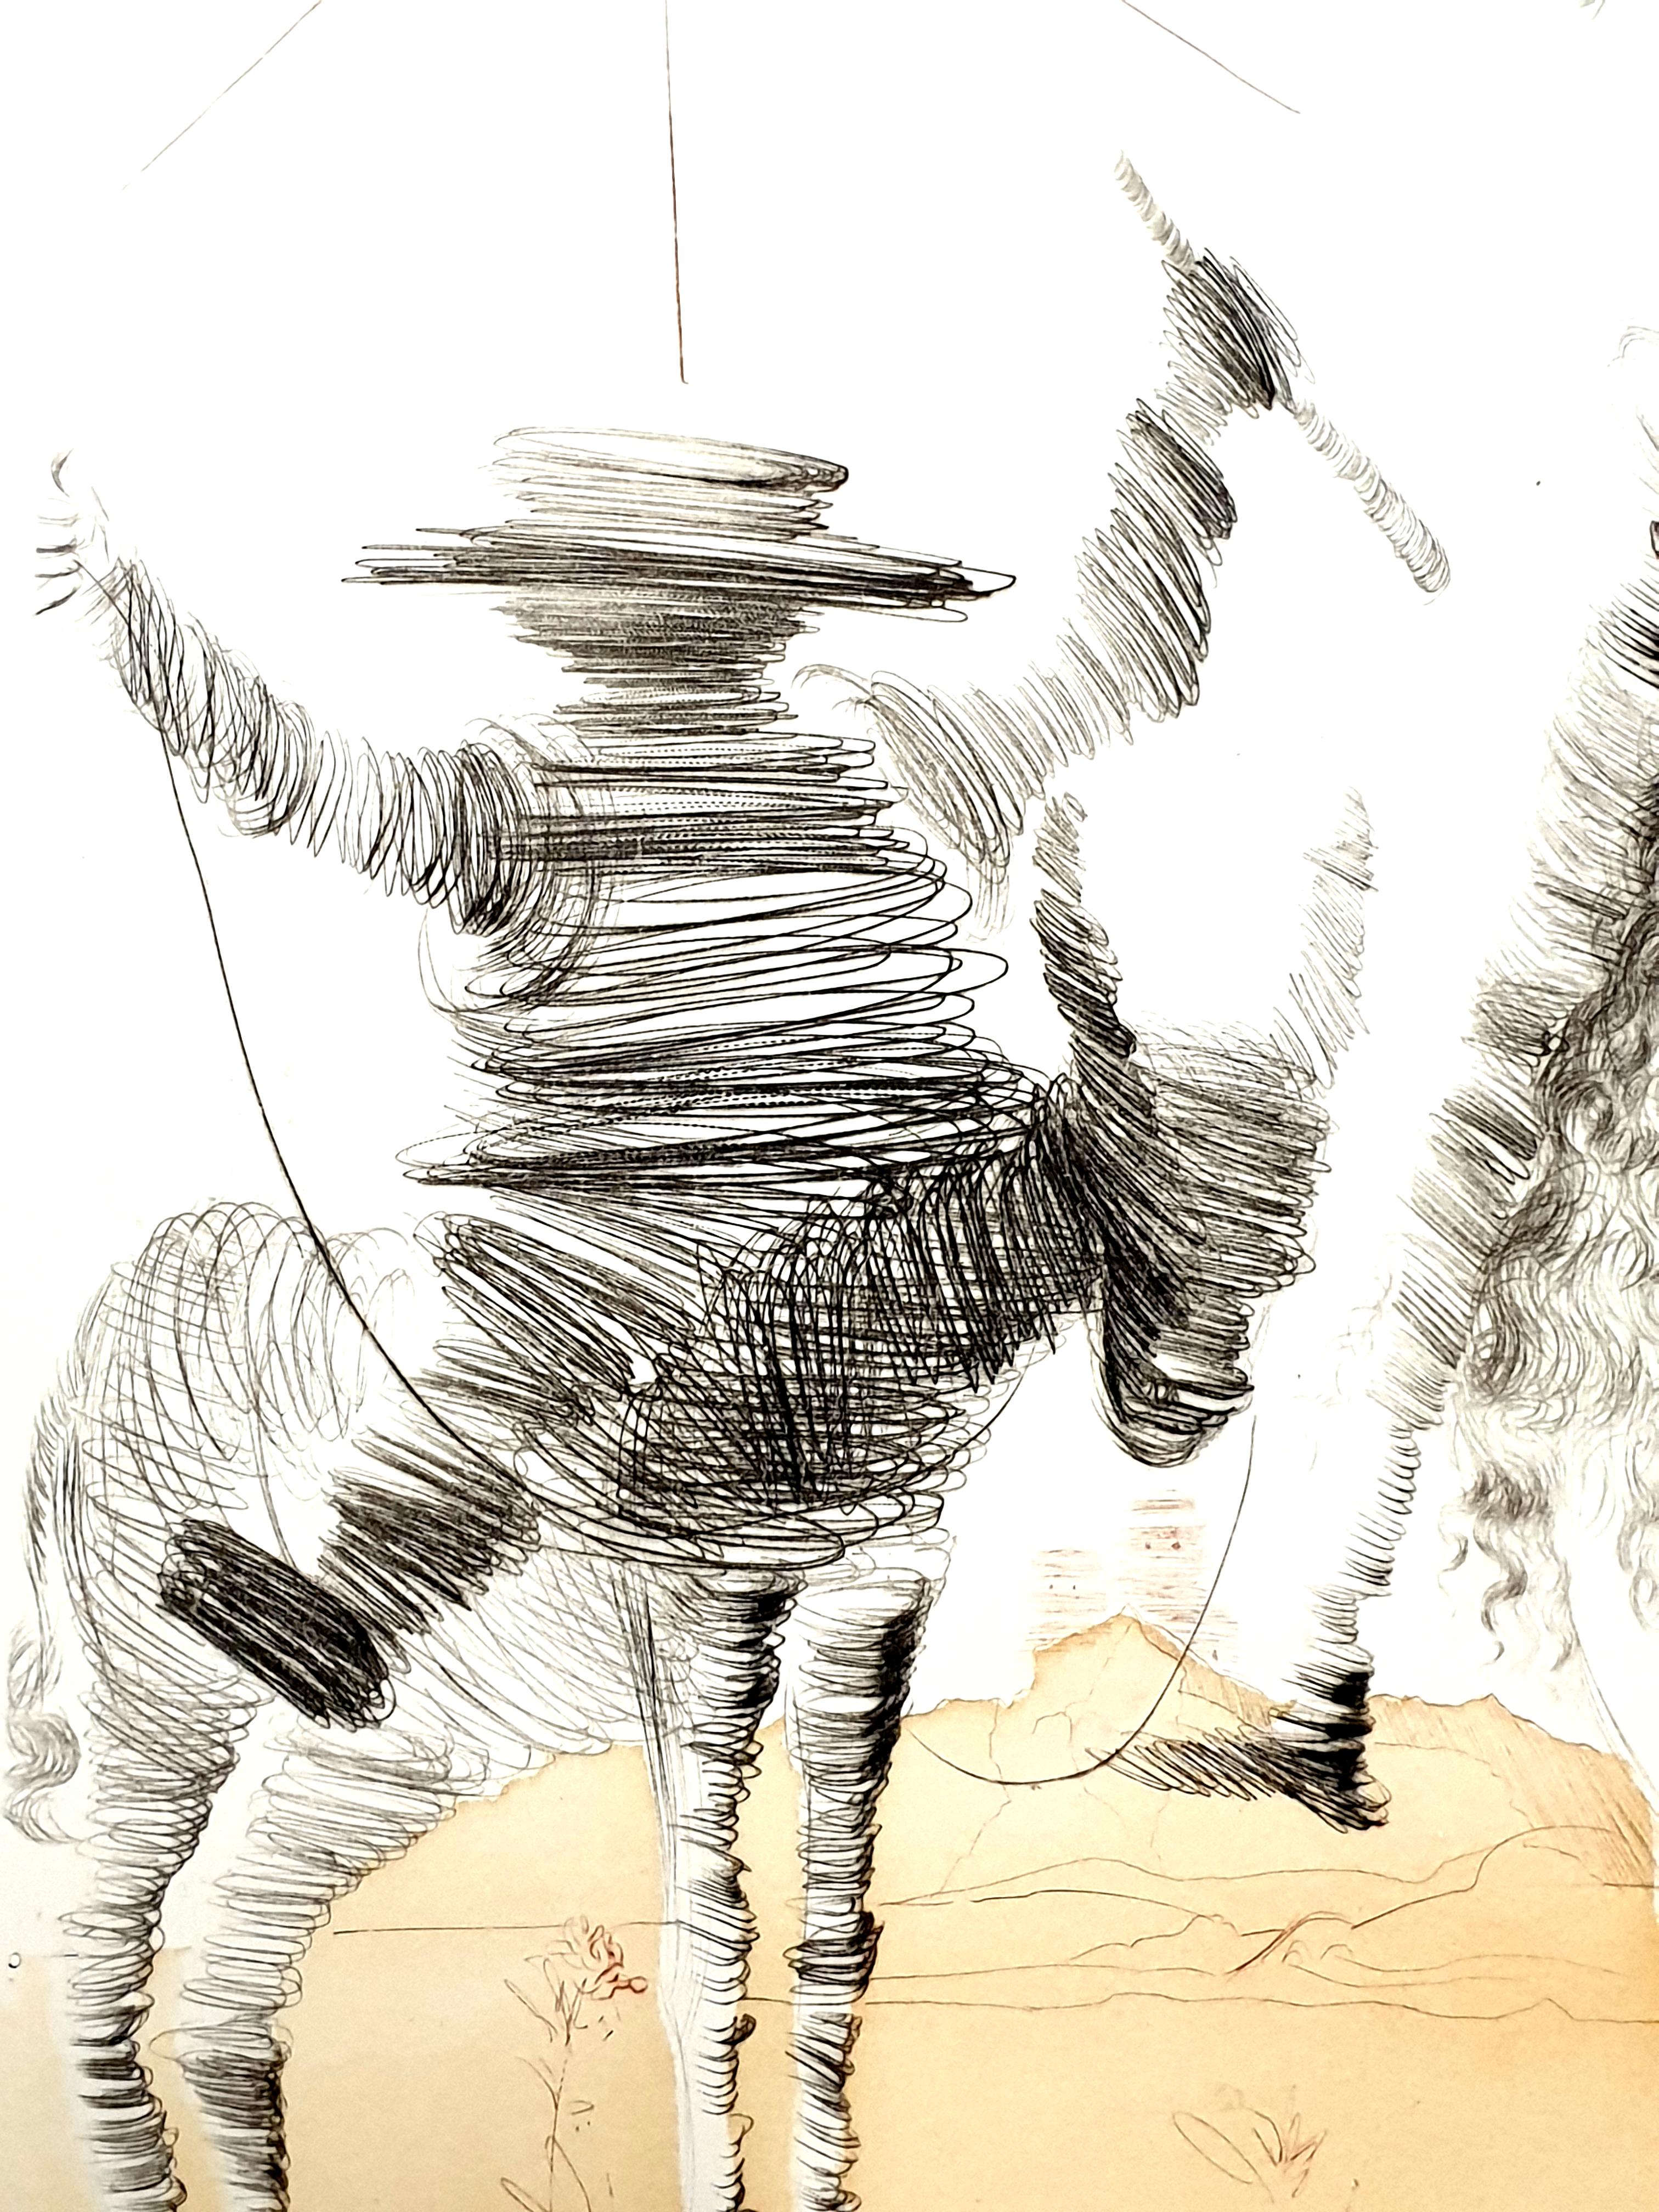 Salvador Dali - Don Quixote and Sancho - Original Hand Signed Etching - Surrealist Print by Salvador Dalí